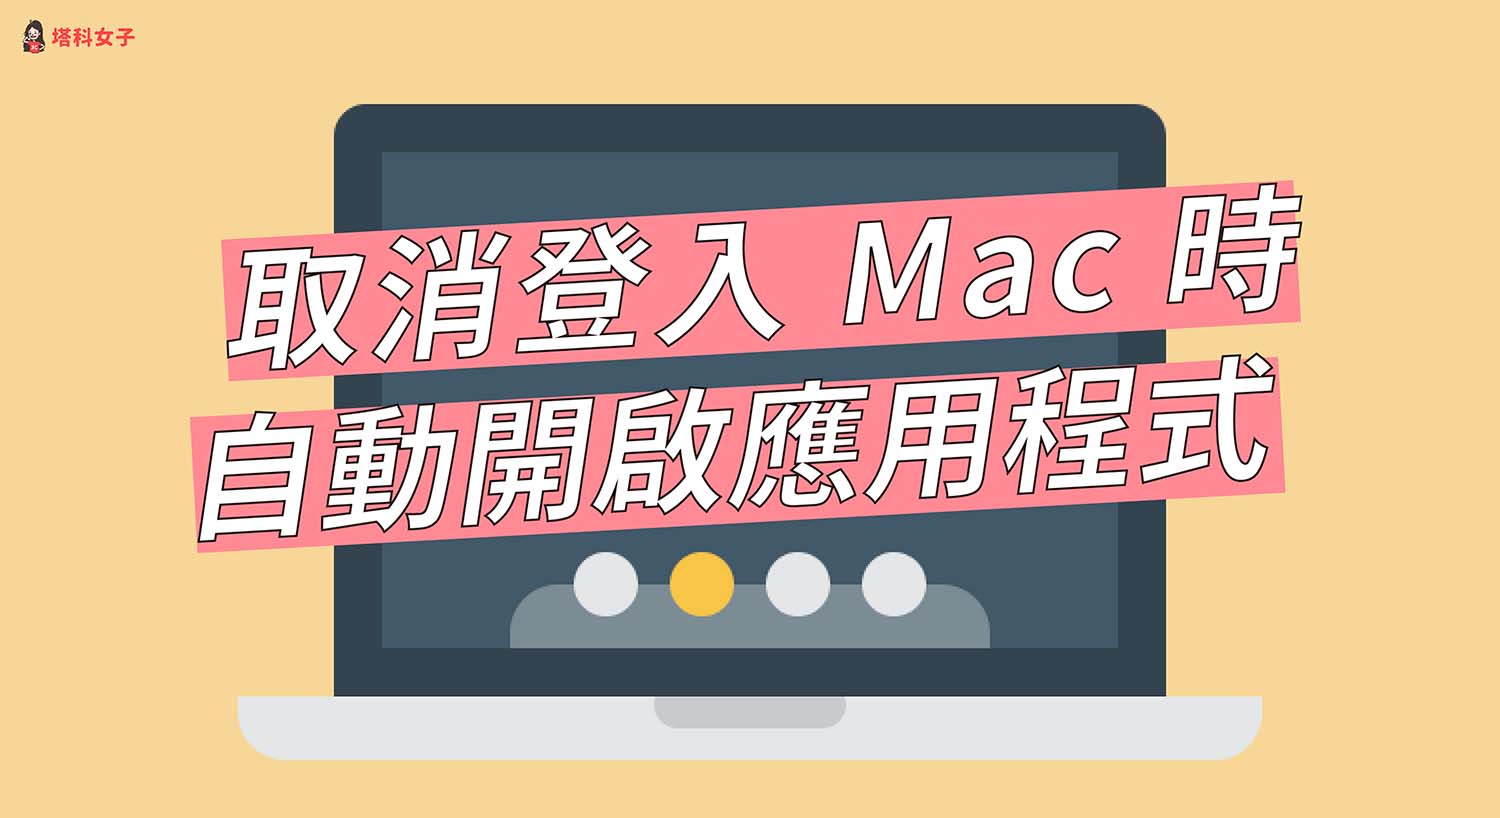 Mac 重開機或登入時會自動打開應用程式 APP？教你這 3 招解決！